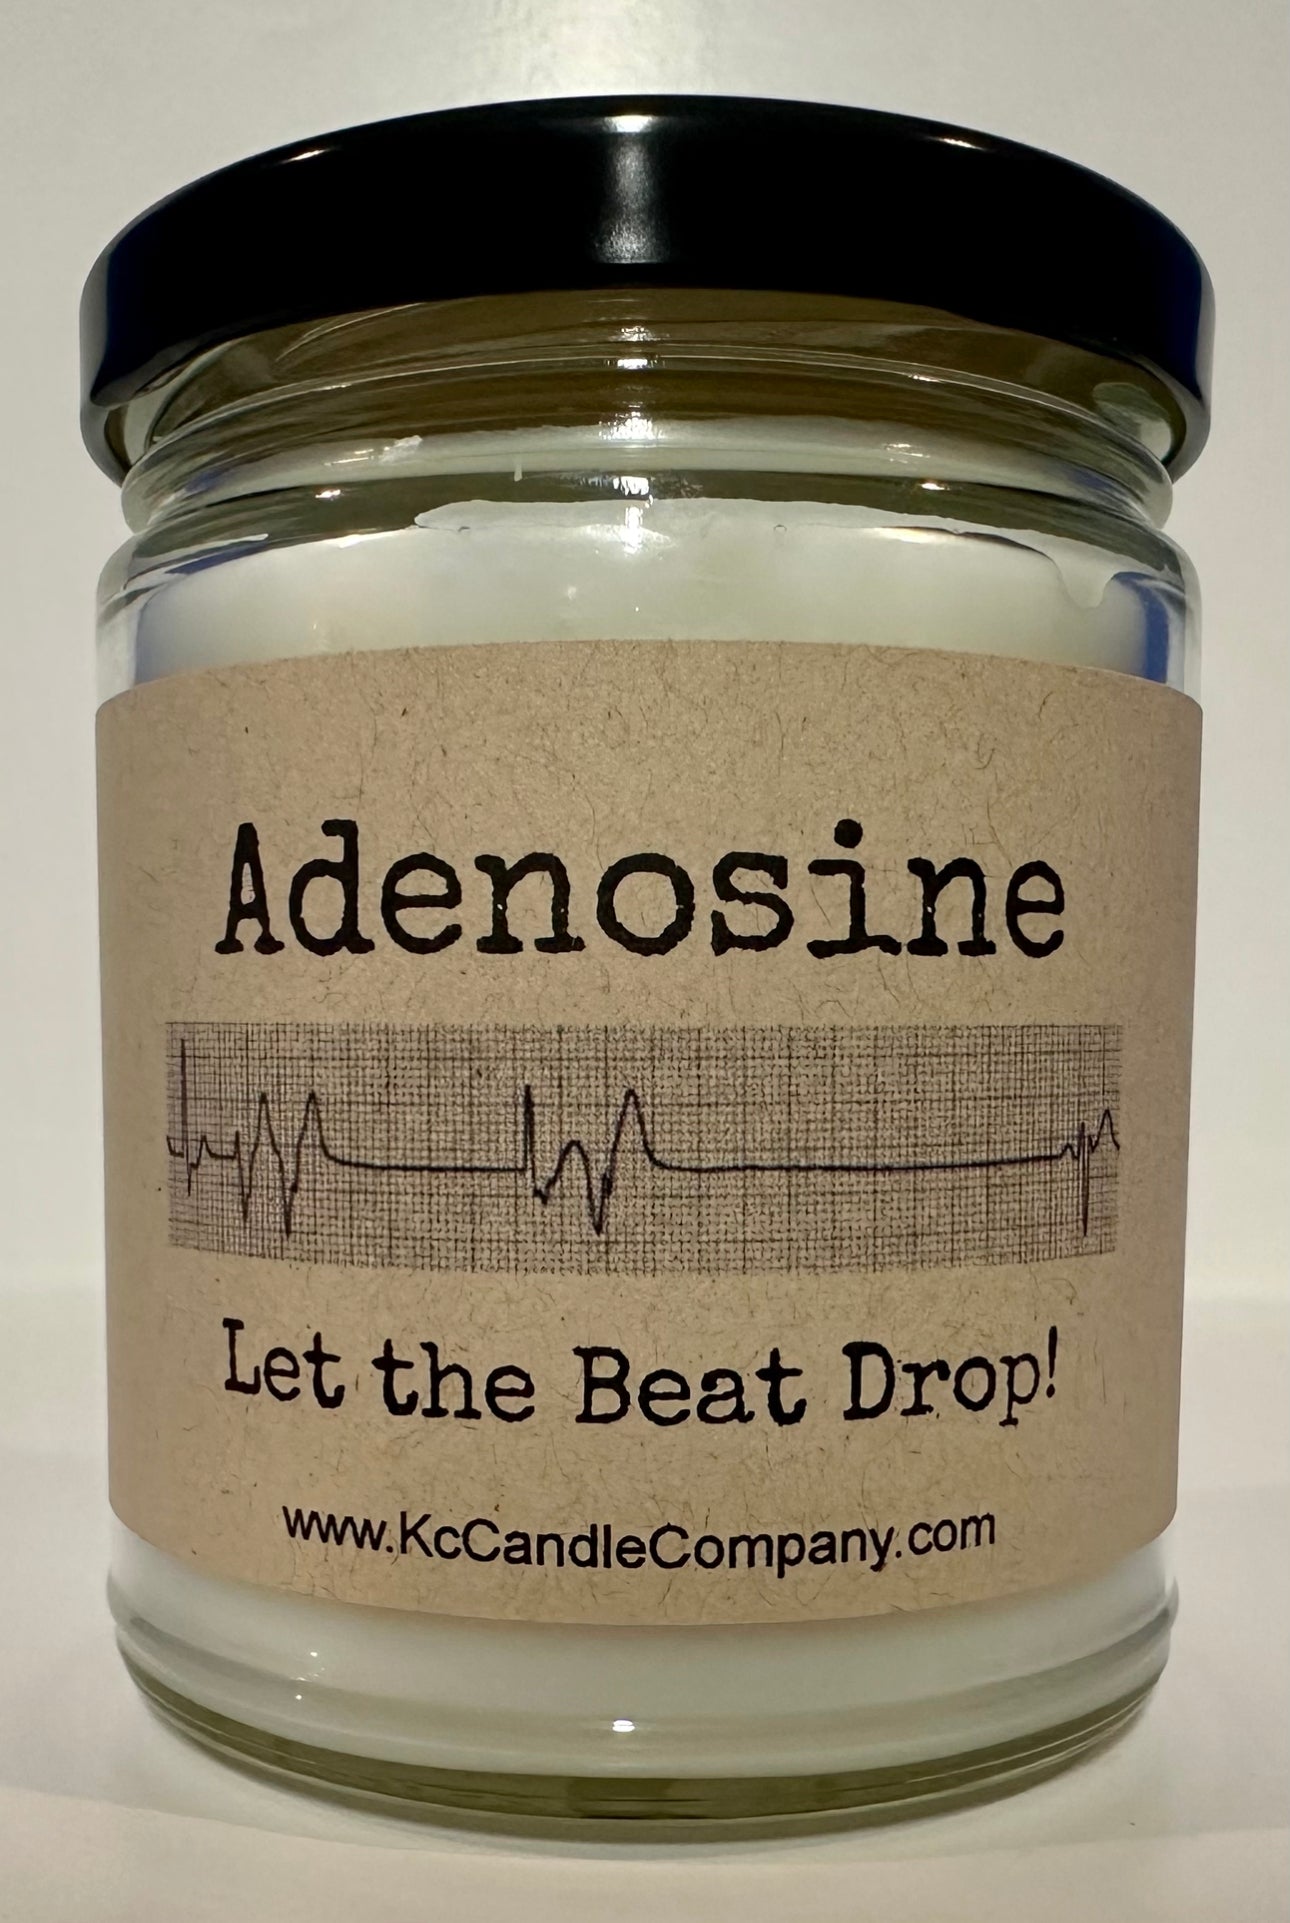 Adenosine - Let the Beat Drop